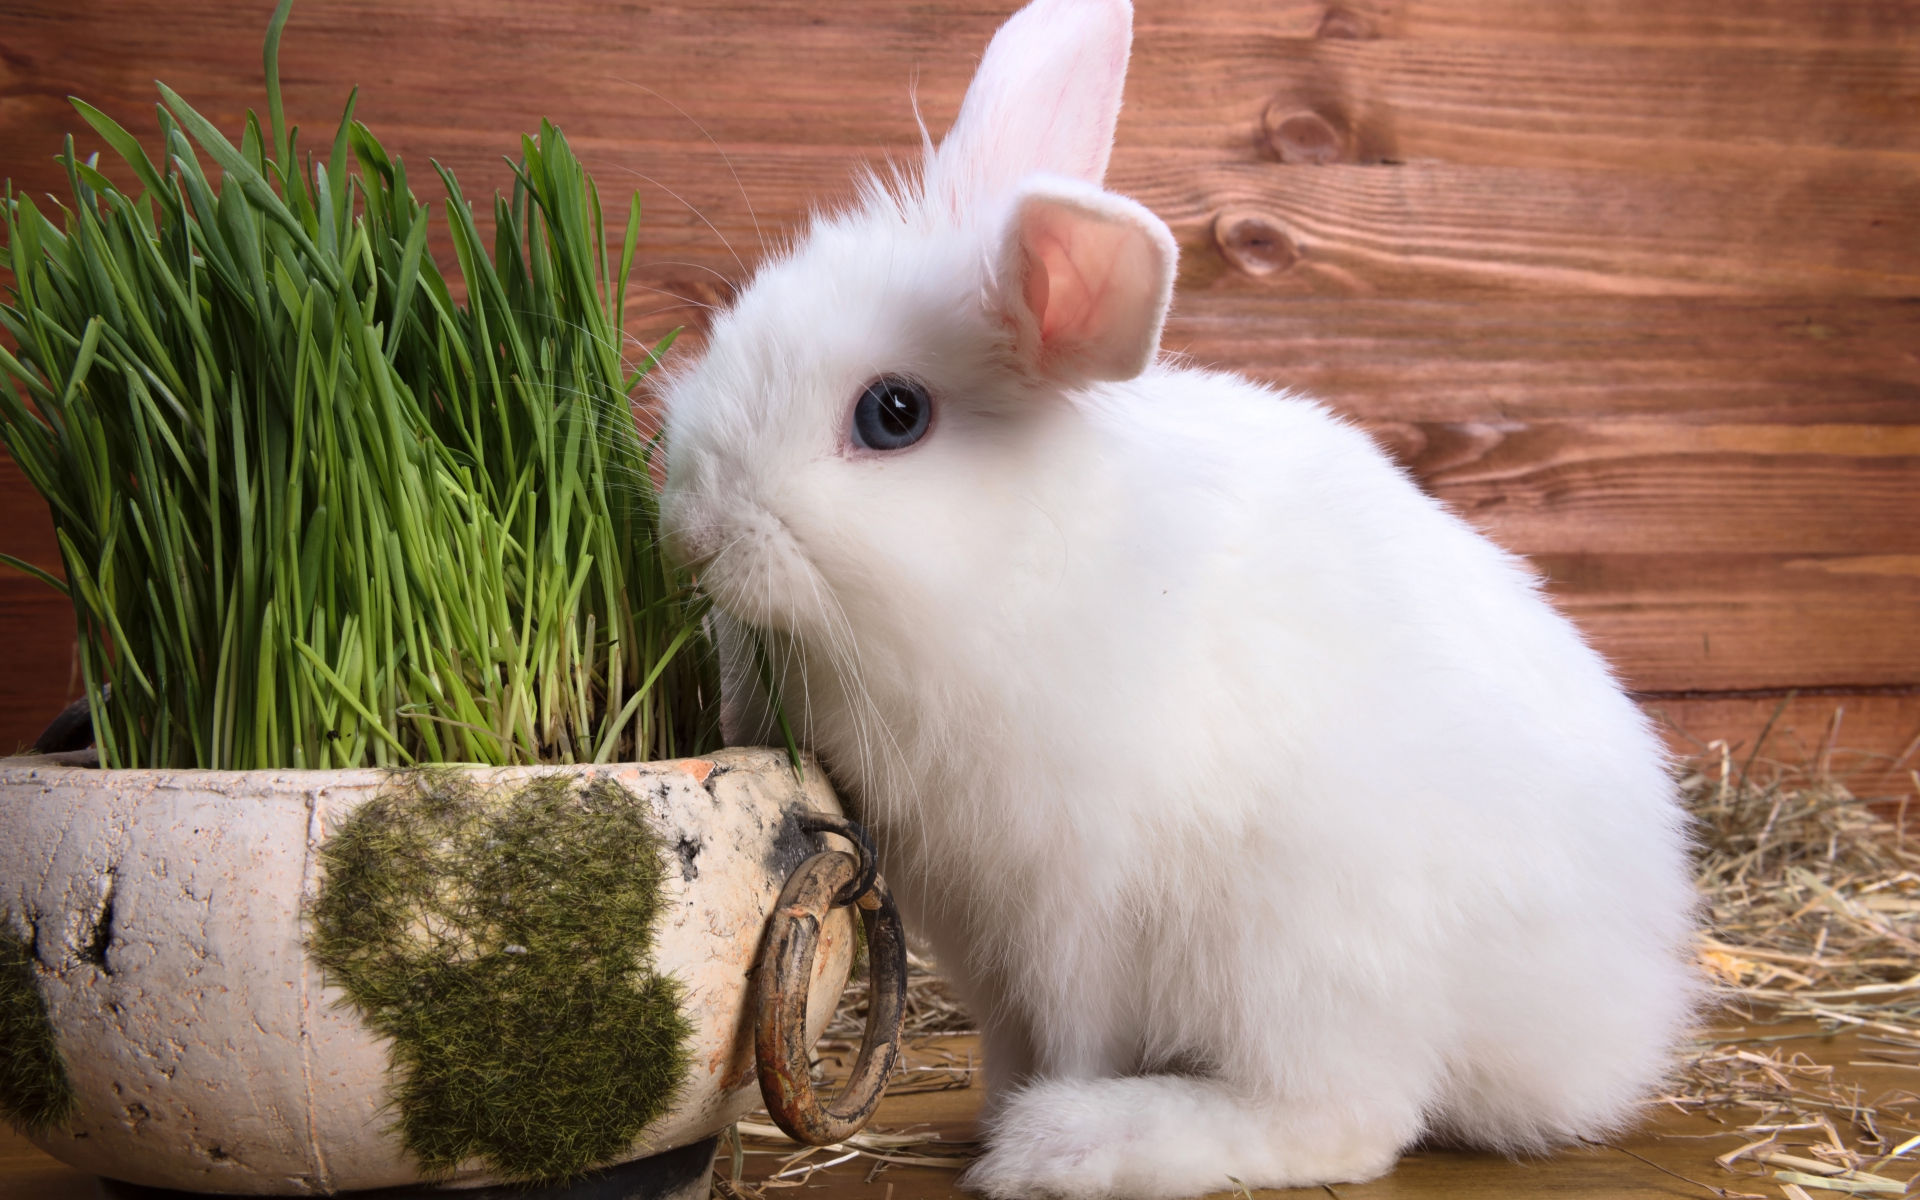 White fluffy decorative rabbit on wooden background